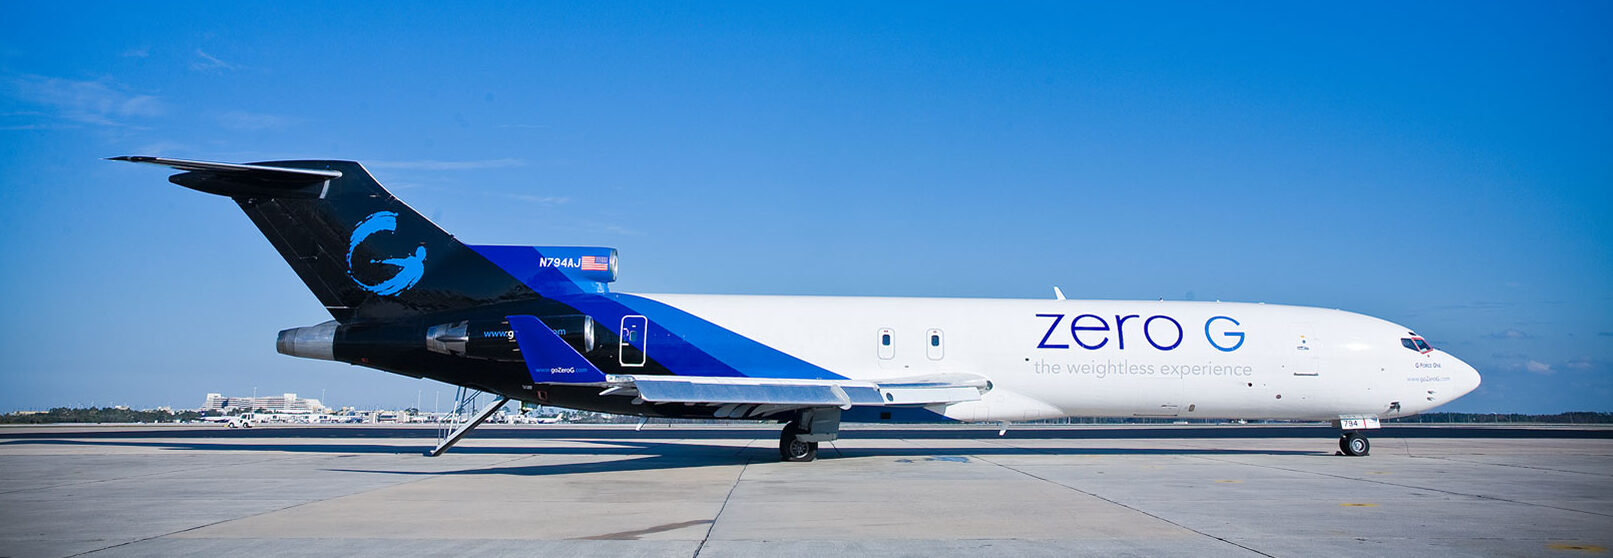 The ZERO-G Airplane